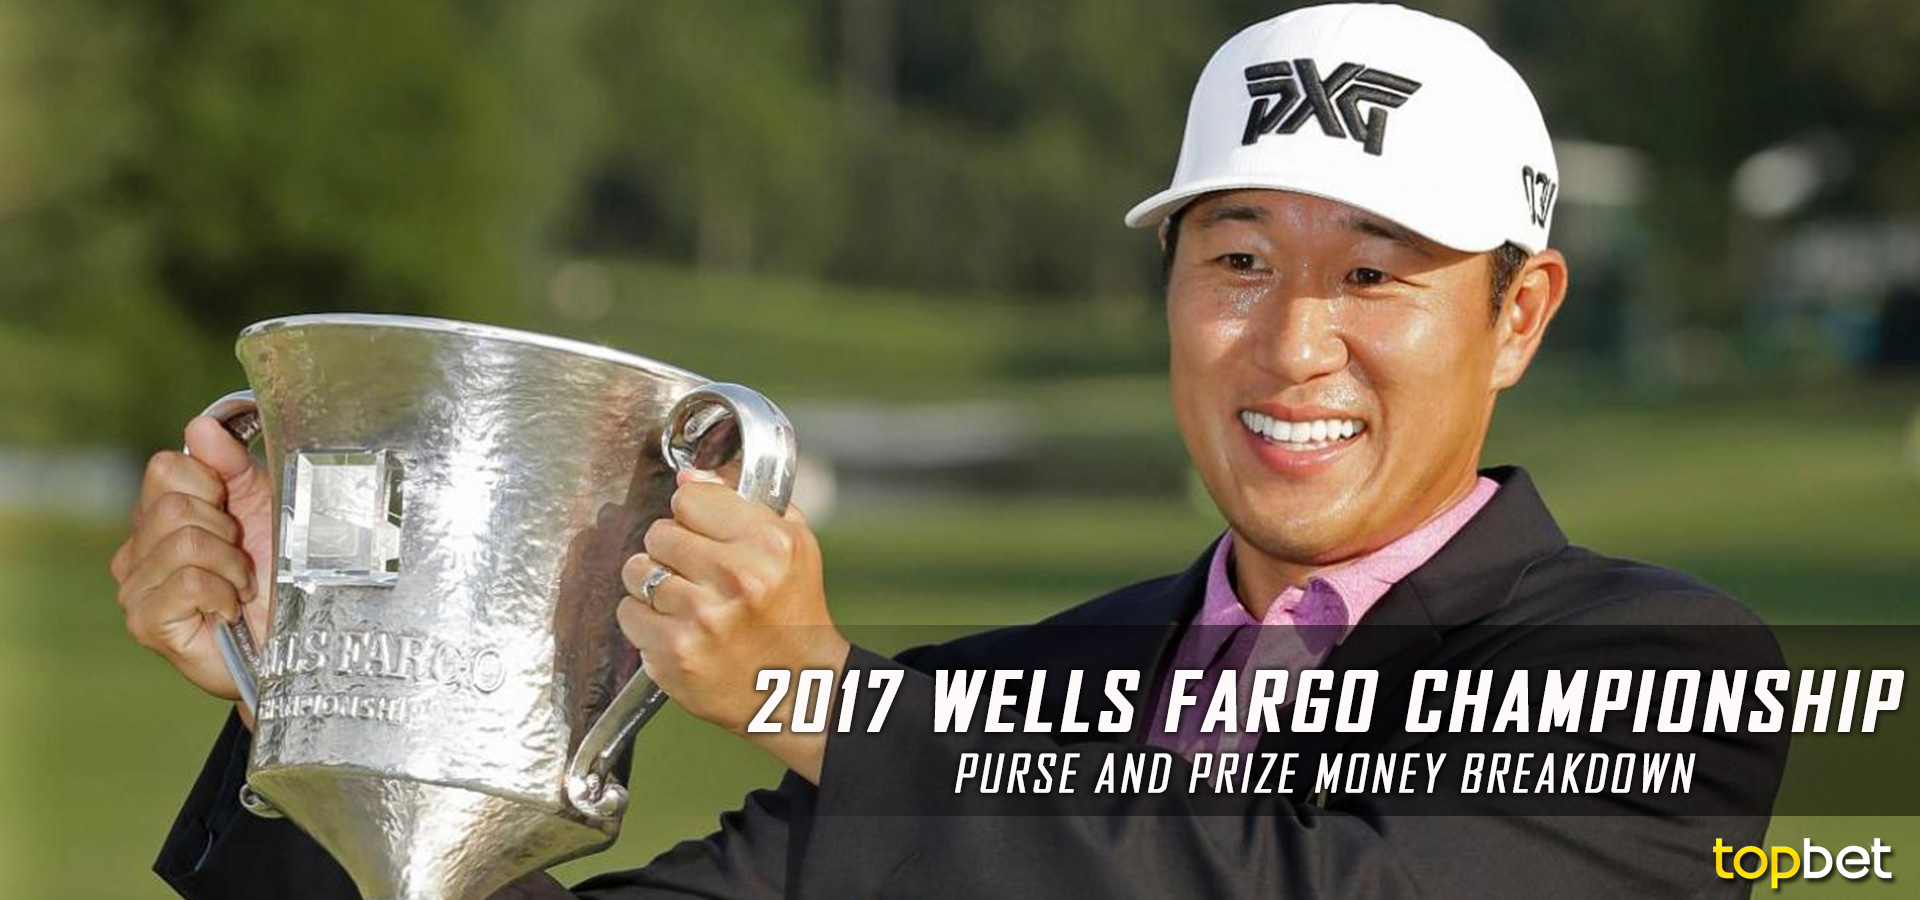 2019 wells fargo championship purse